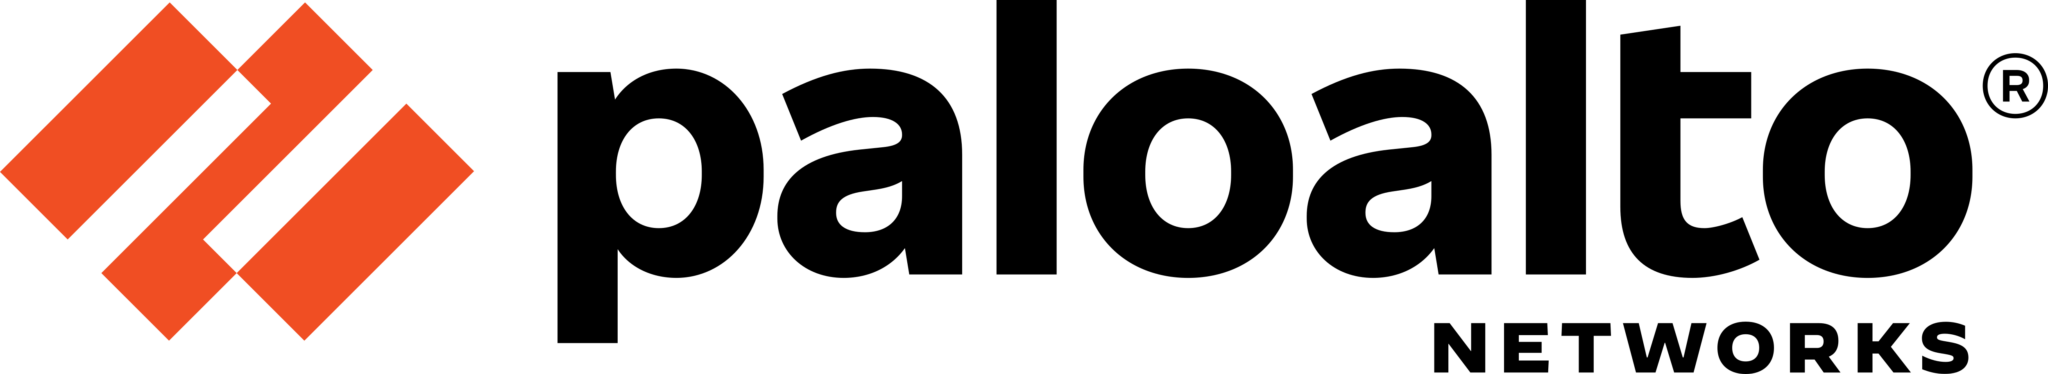 Palo Alto Networks – Logo's downloaden